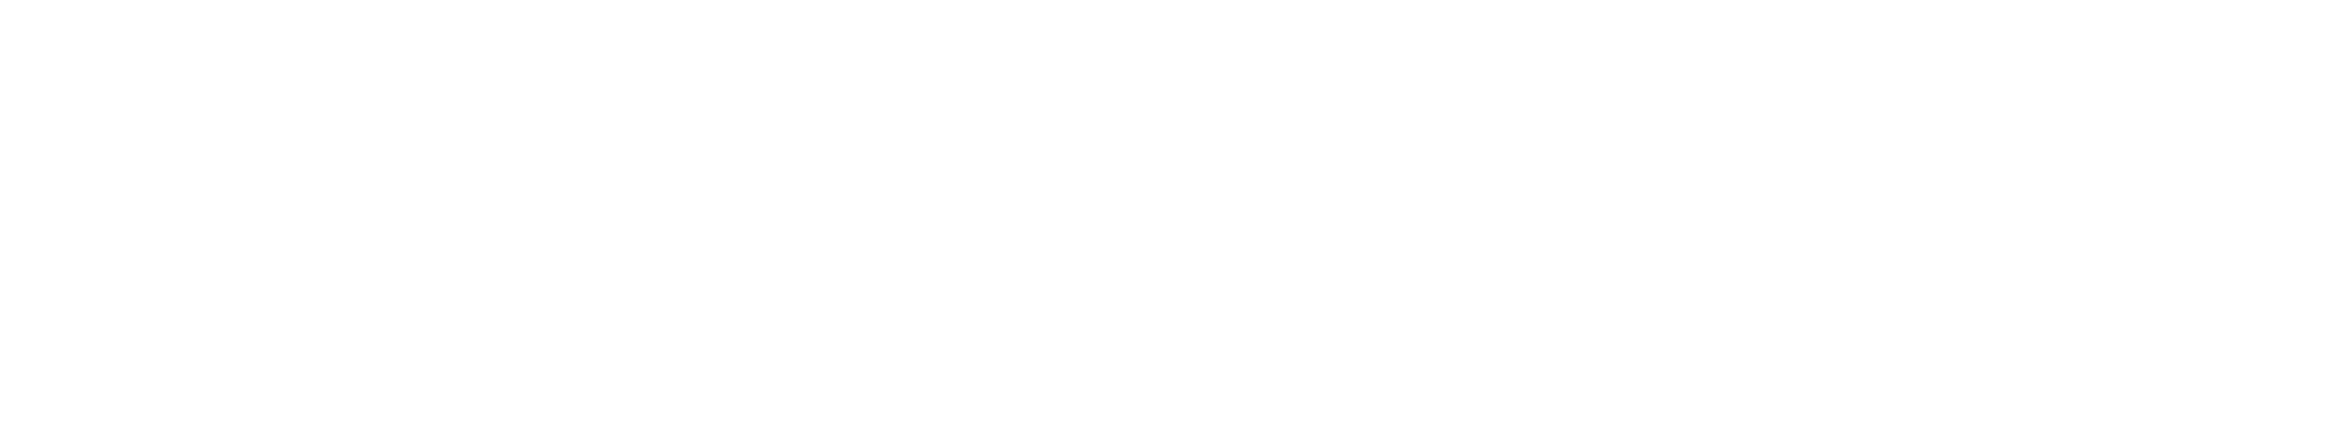 Colorado Behavioral Health Administration Logo